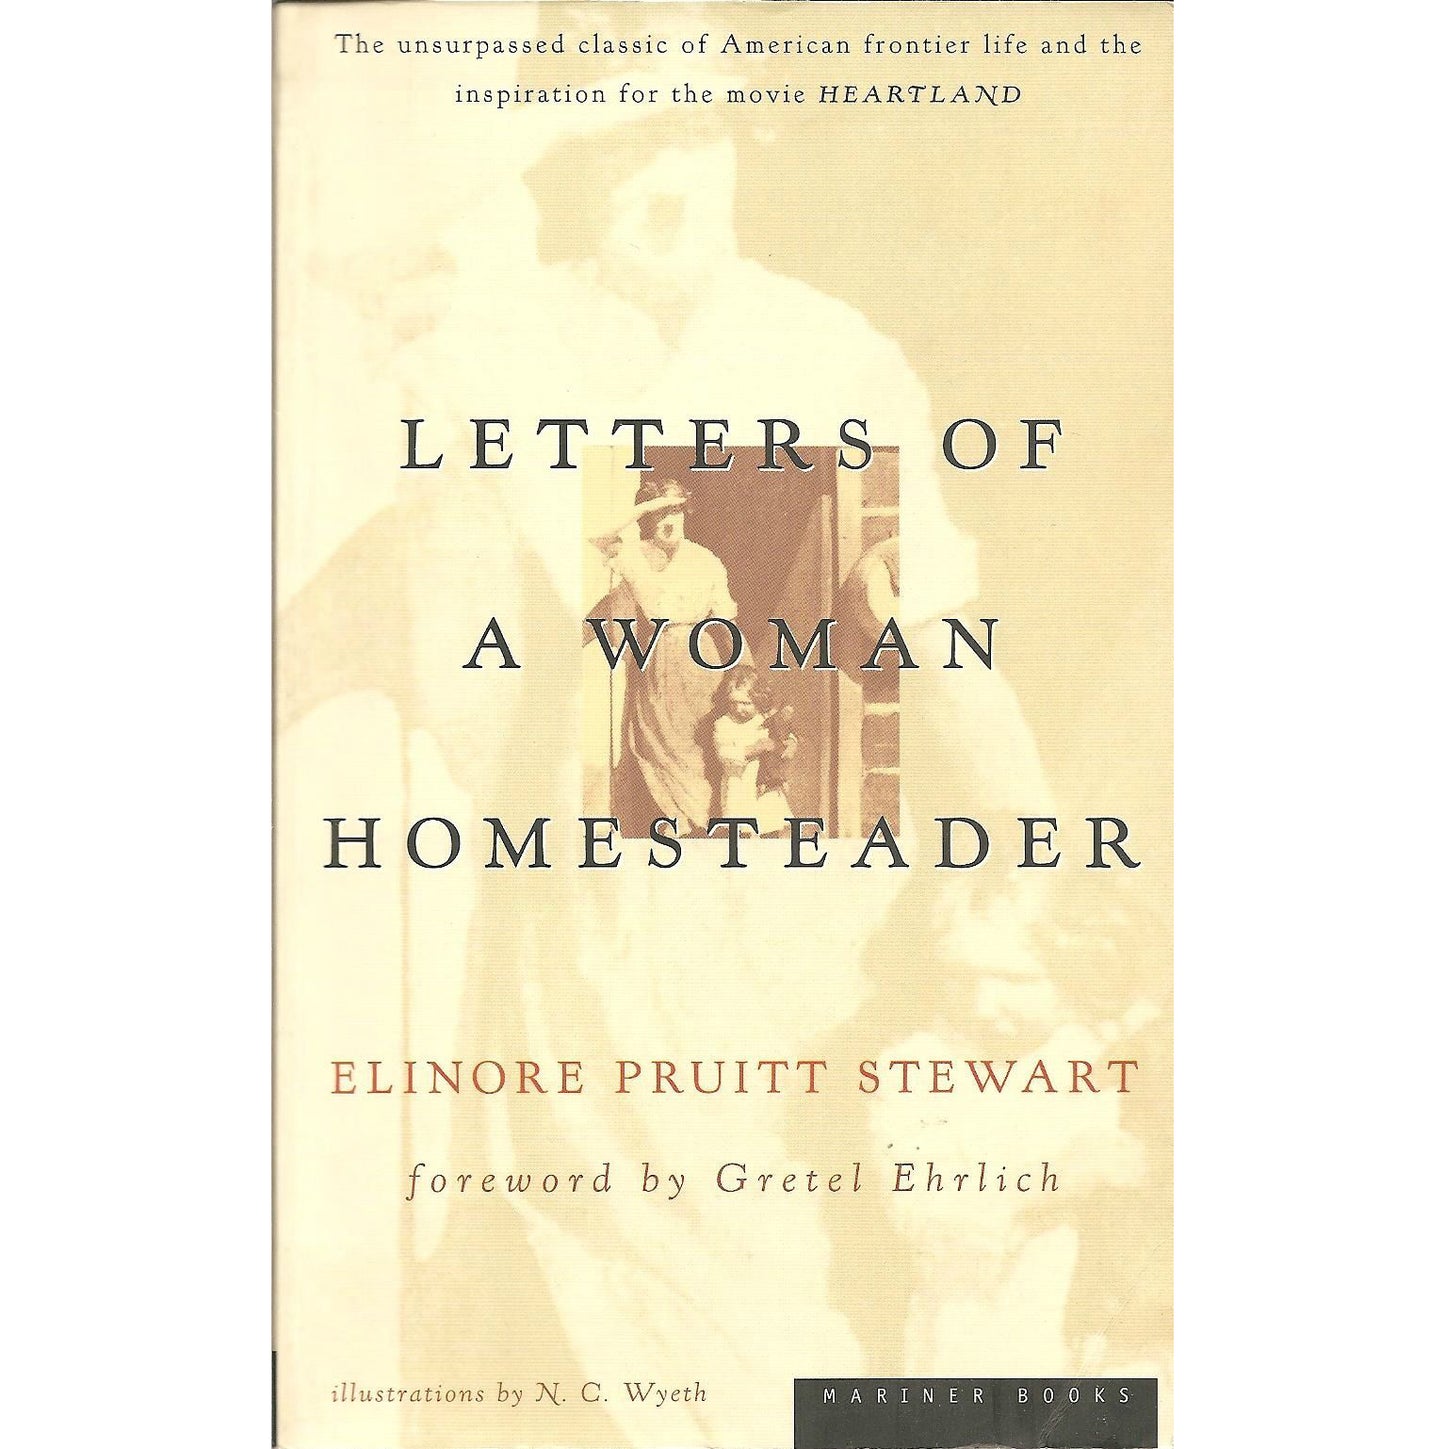 Letters of a Woman Homesteader by Elinore Pruitt Stewart